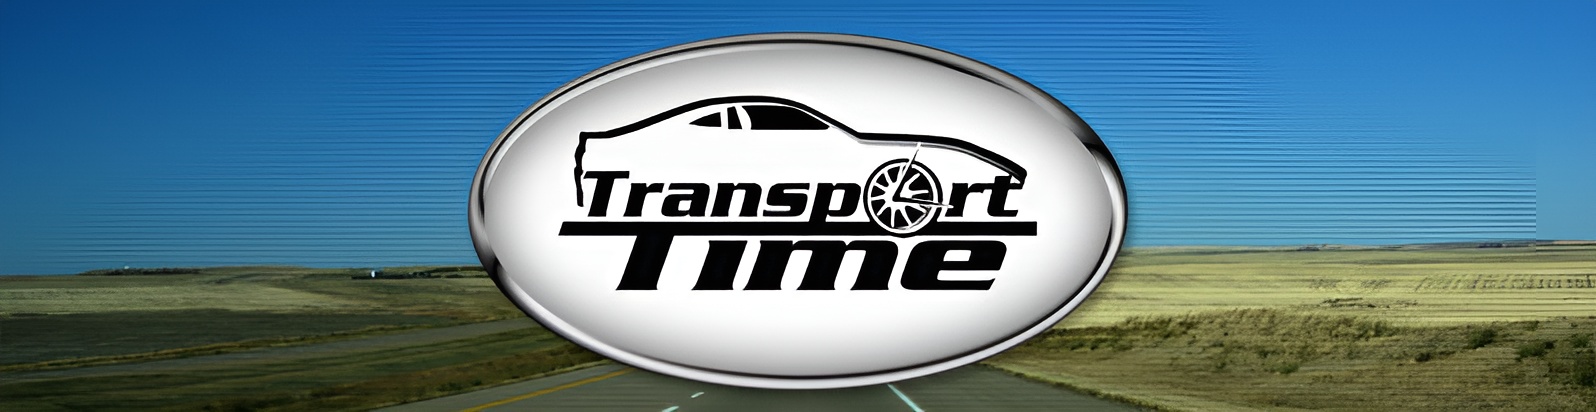 Transport Time Logo